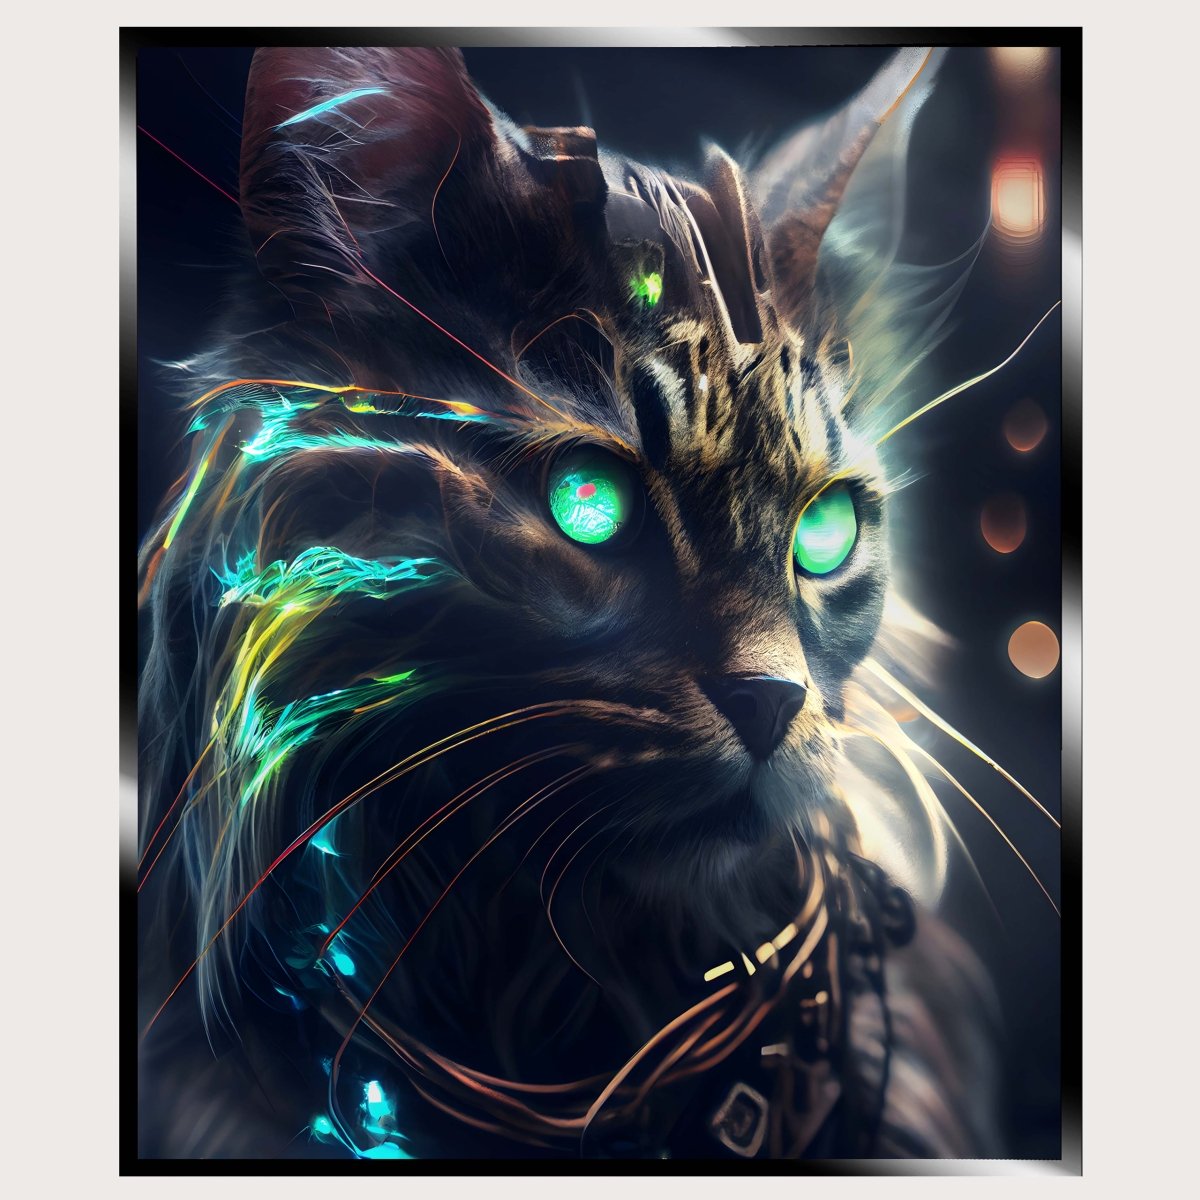 Illuminated Wall Art - Black Cat - madaboutneon